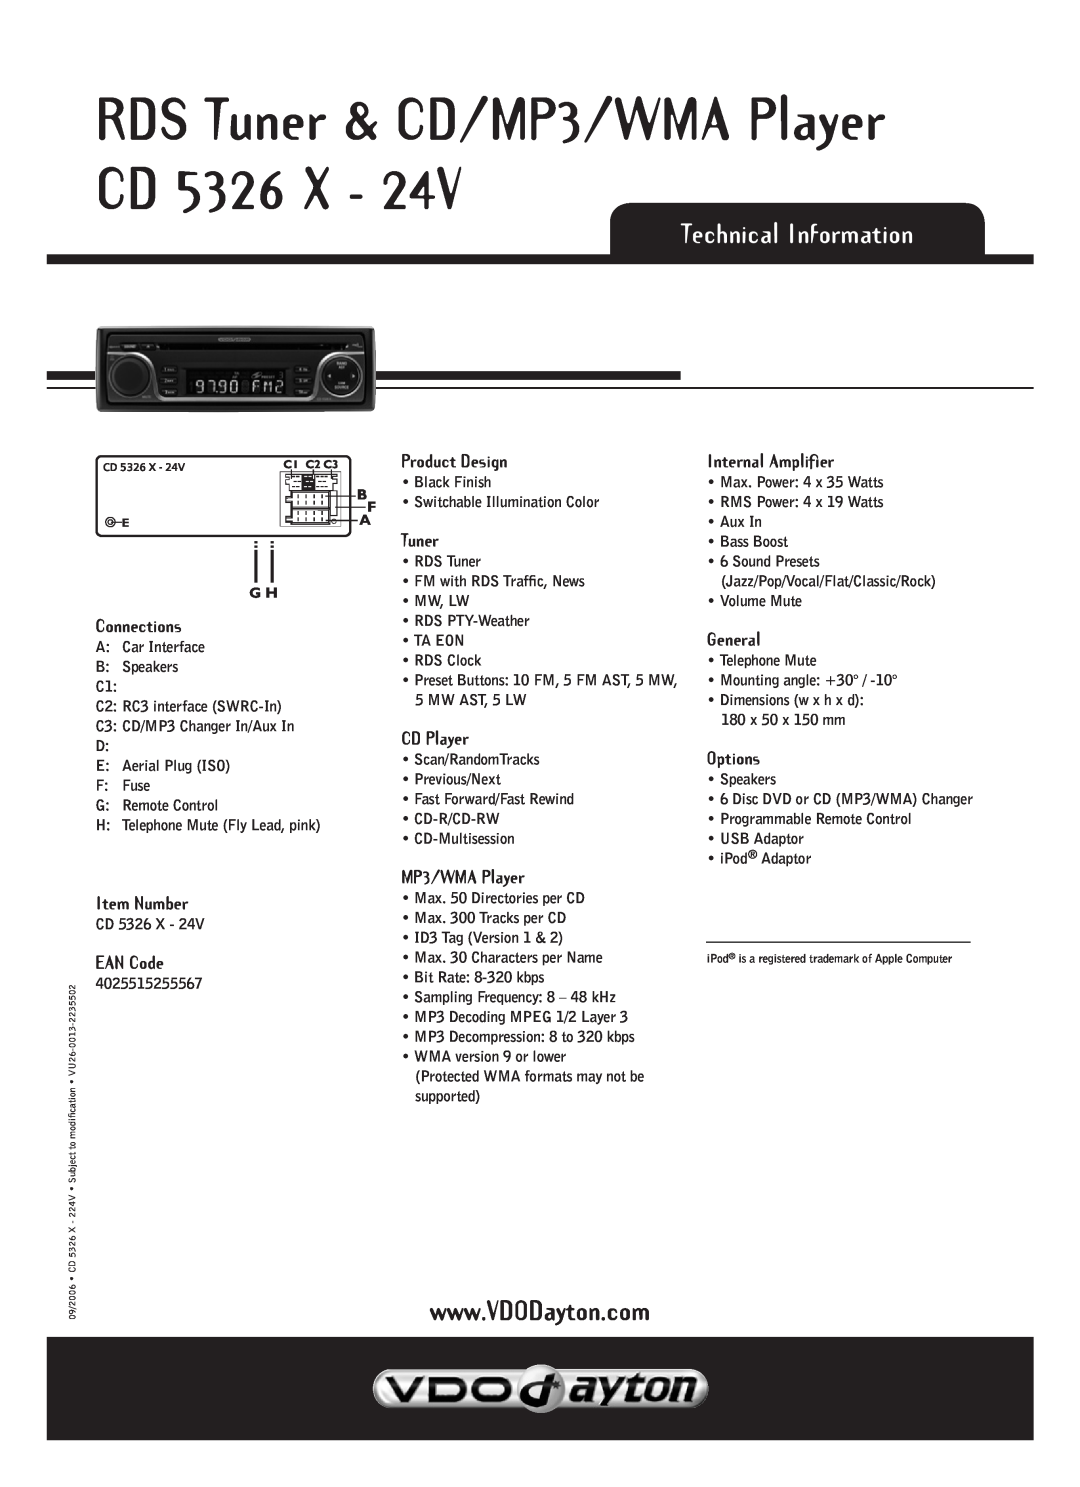 VDO Dayton CD 5326 X - 24V manual Technical Information, RDS Tuner & CD/MP3/WMA Player CD 5326 X 